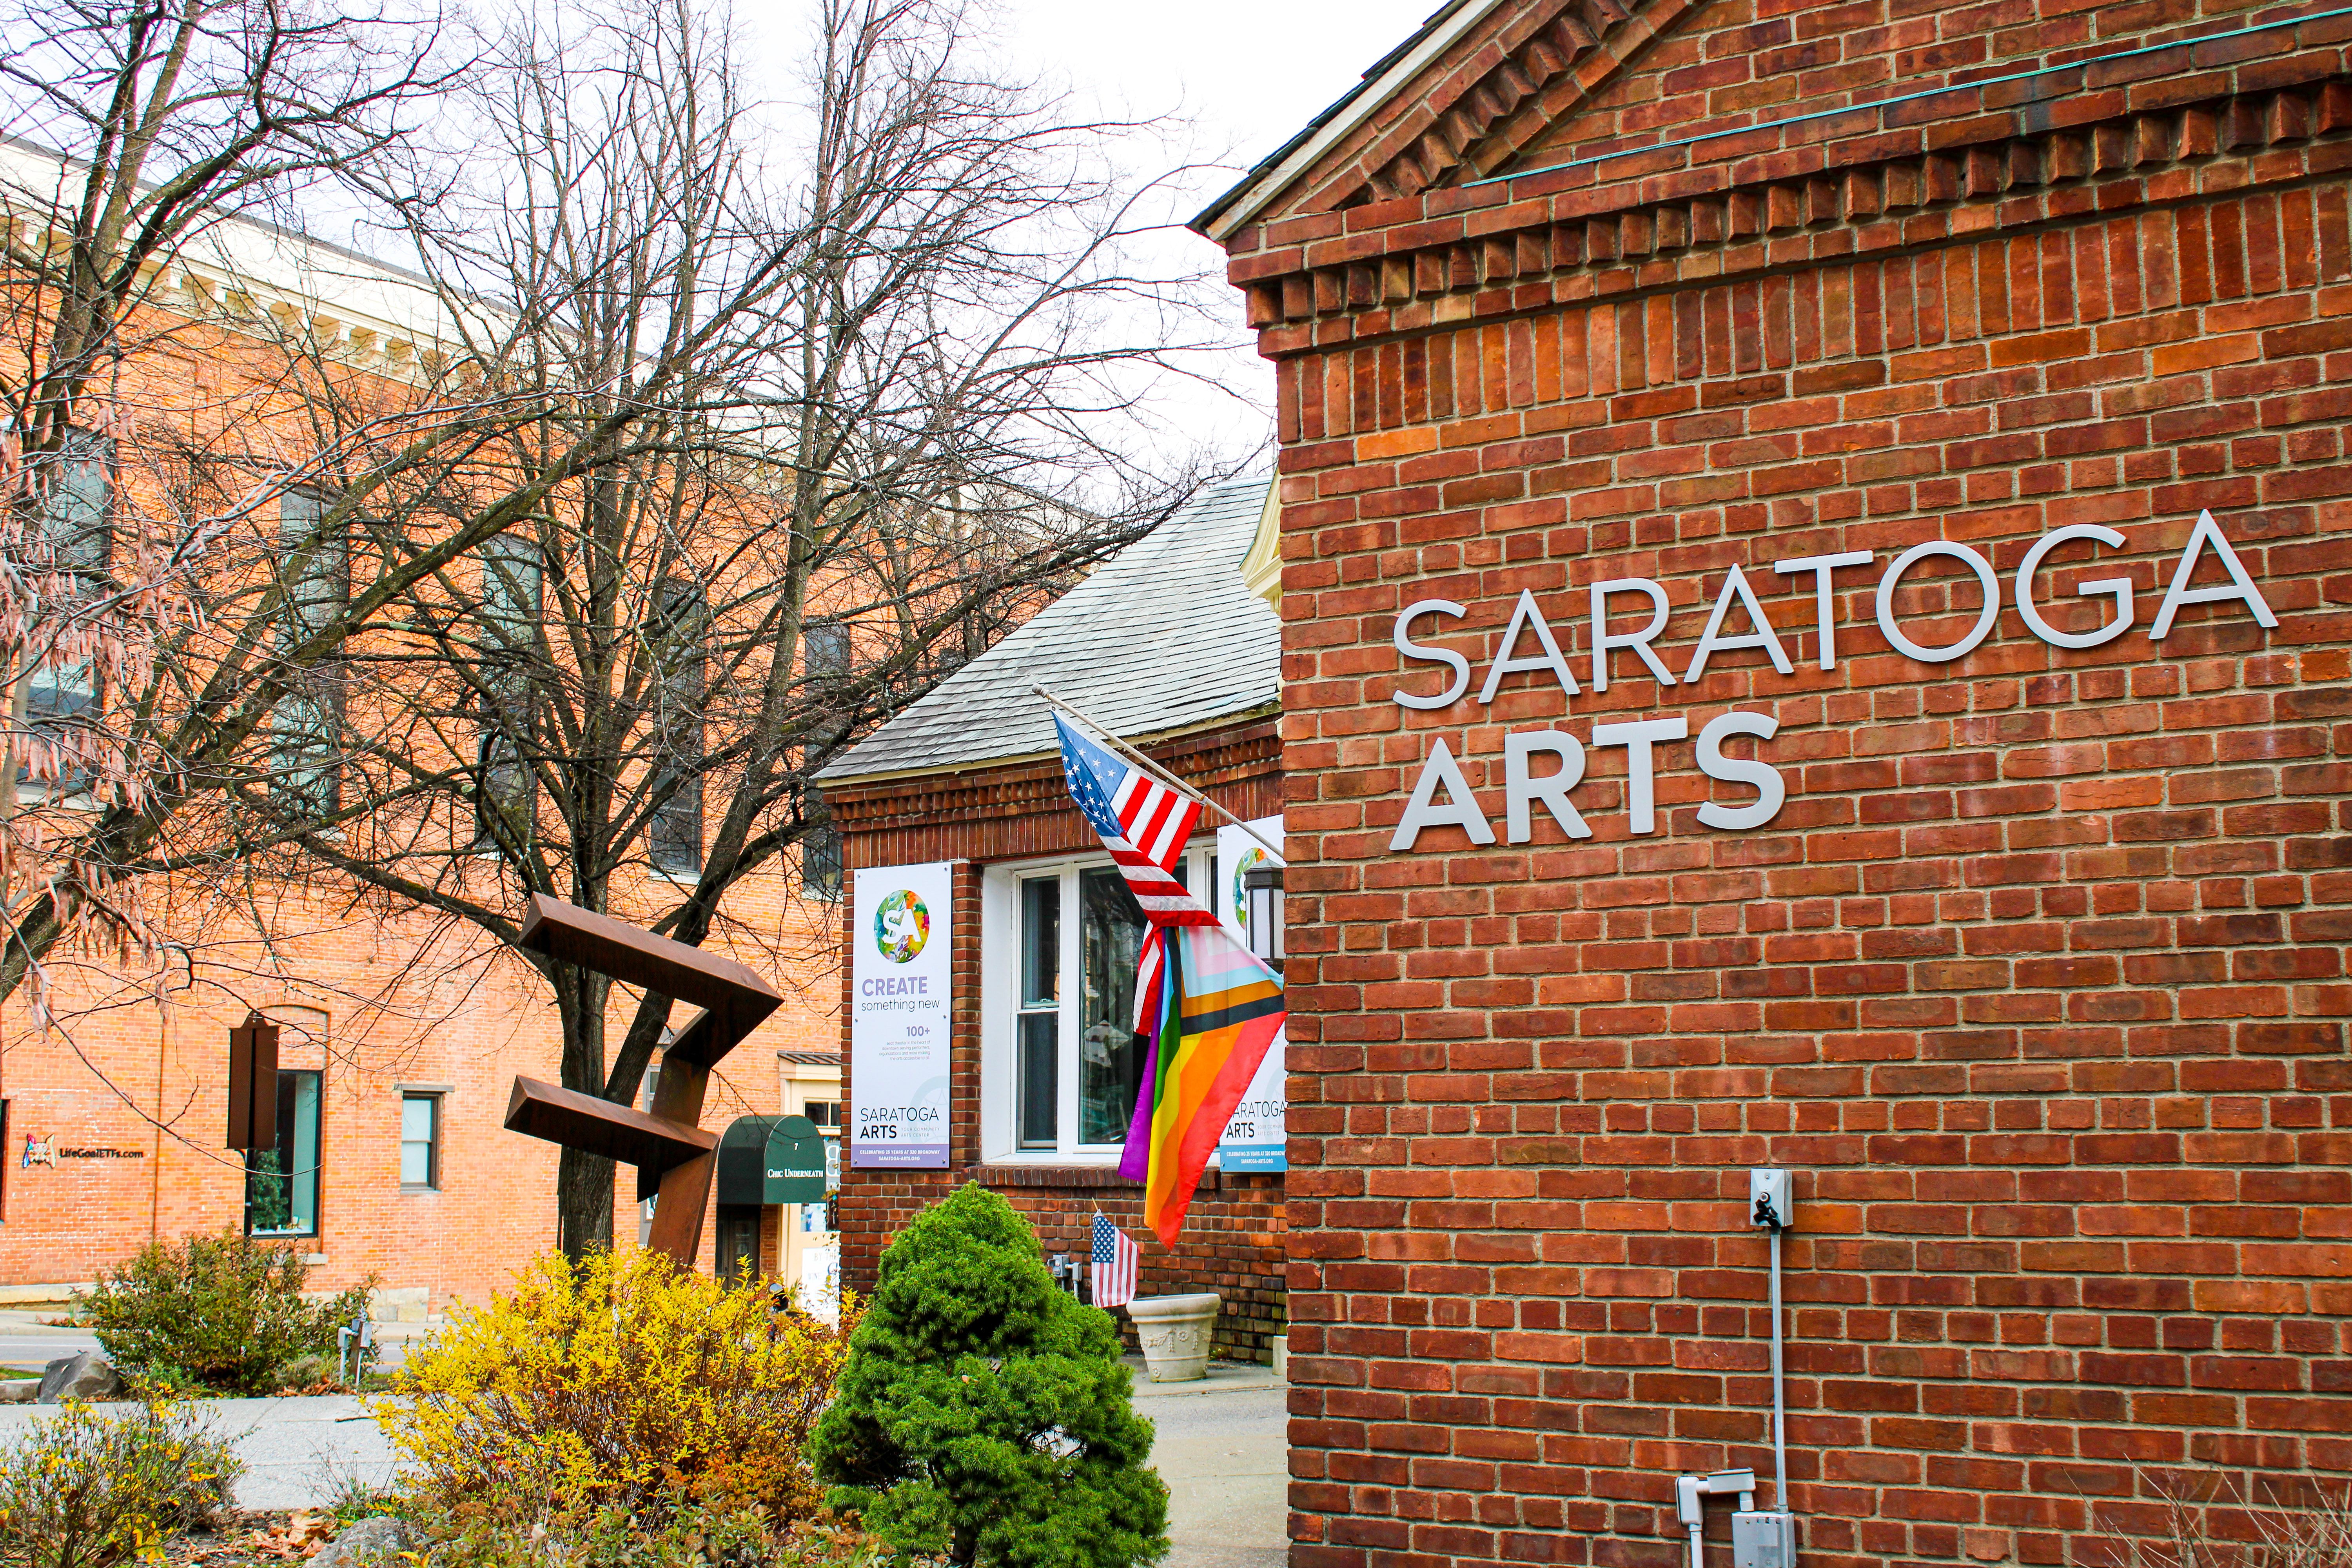 Saratoga Arts